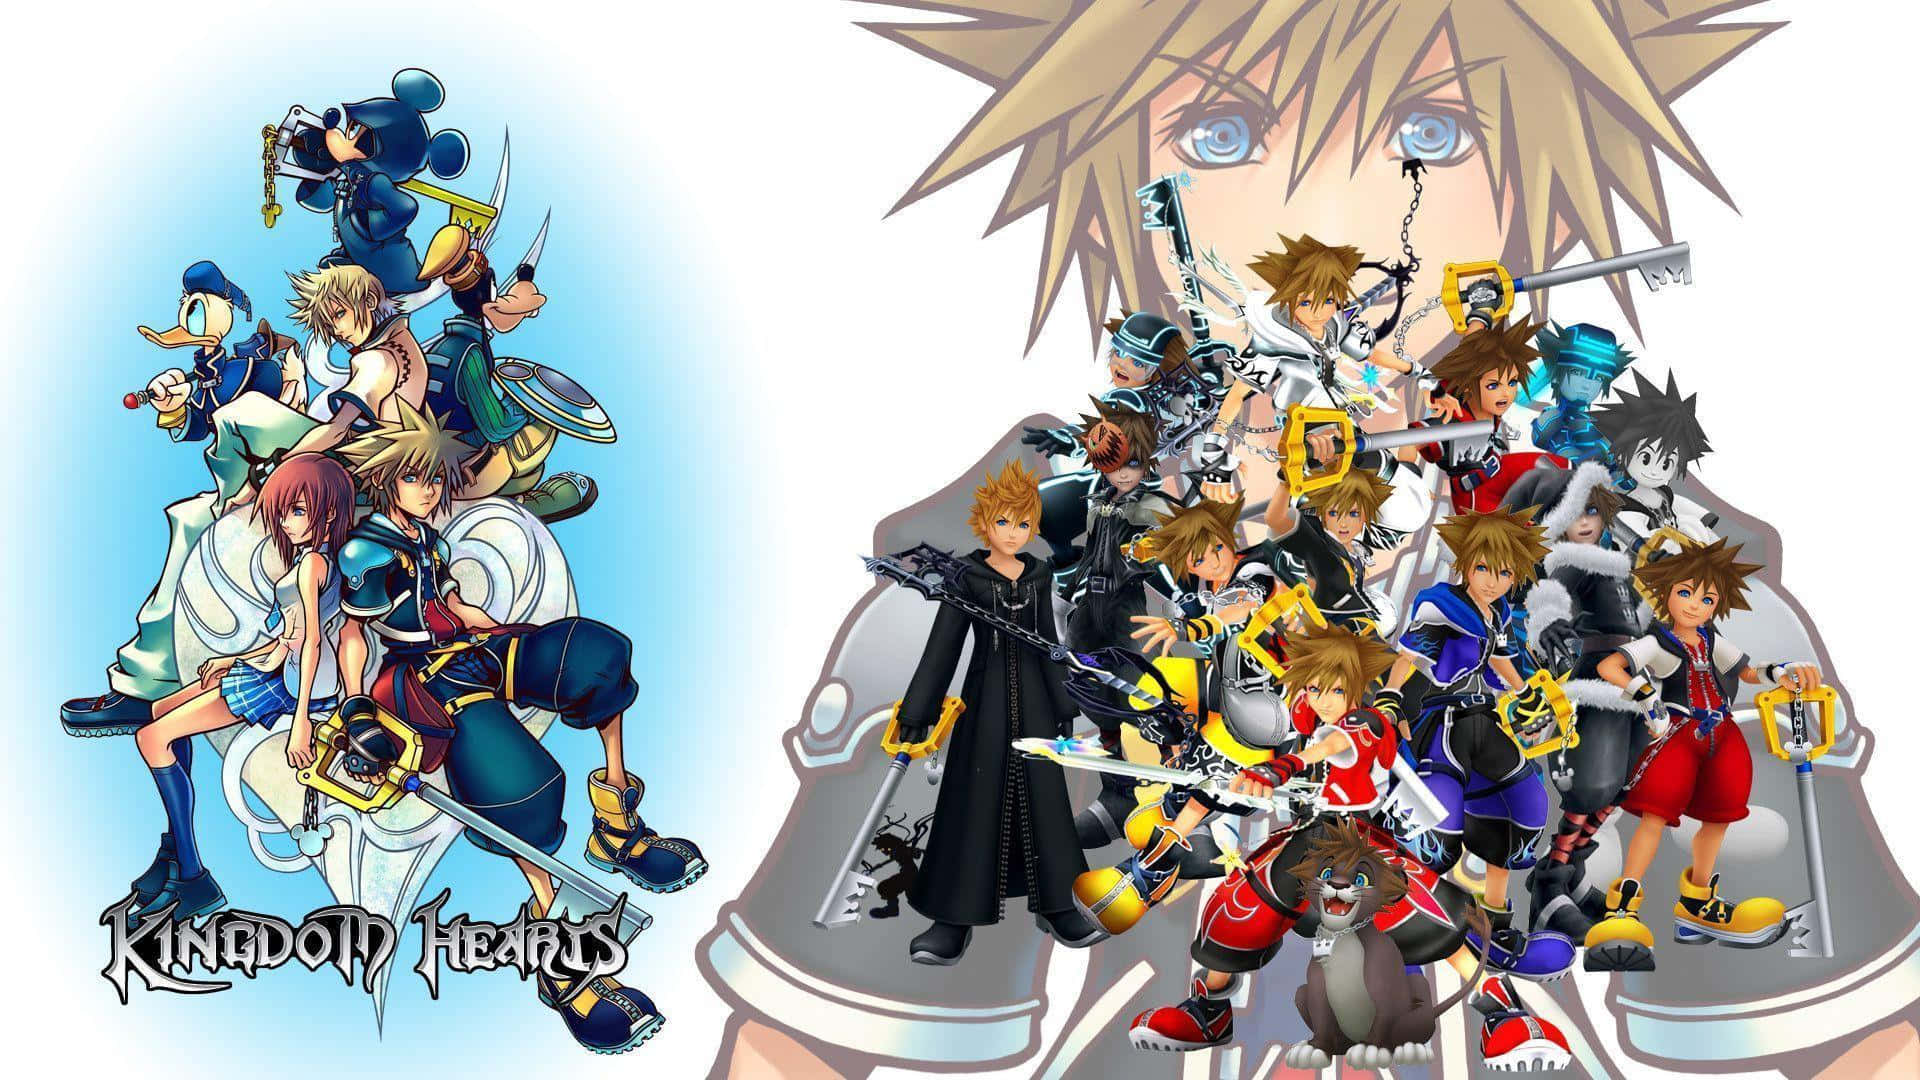 Sora - The Hero of Kingdom Hearts Wallpaper